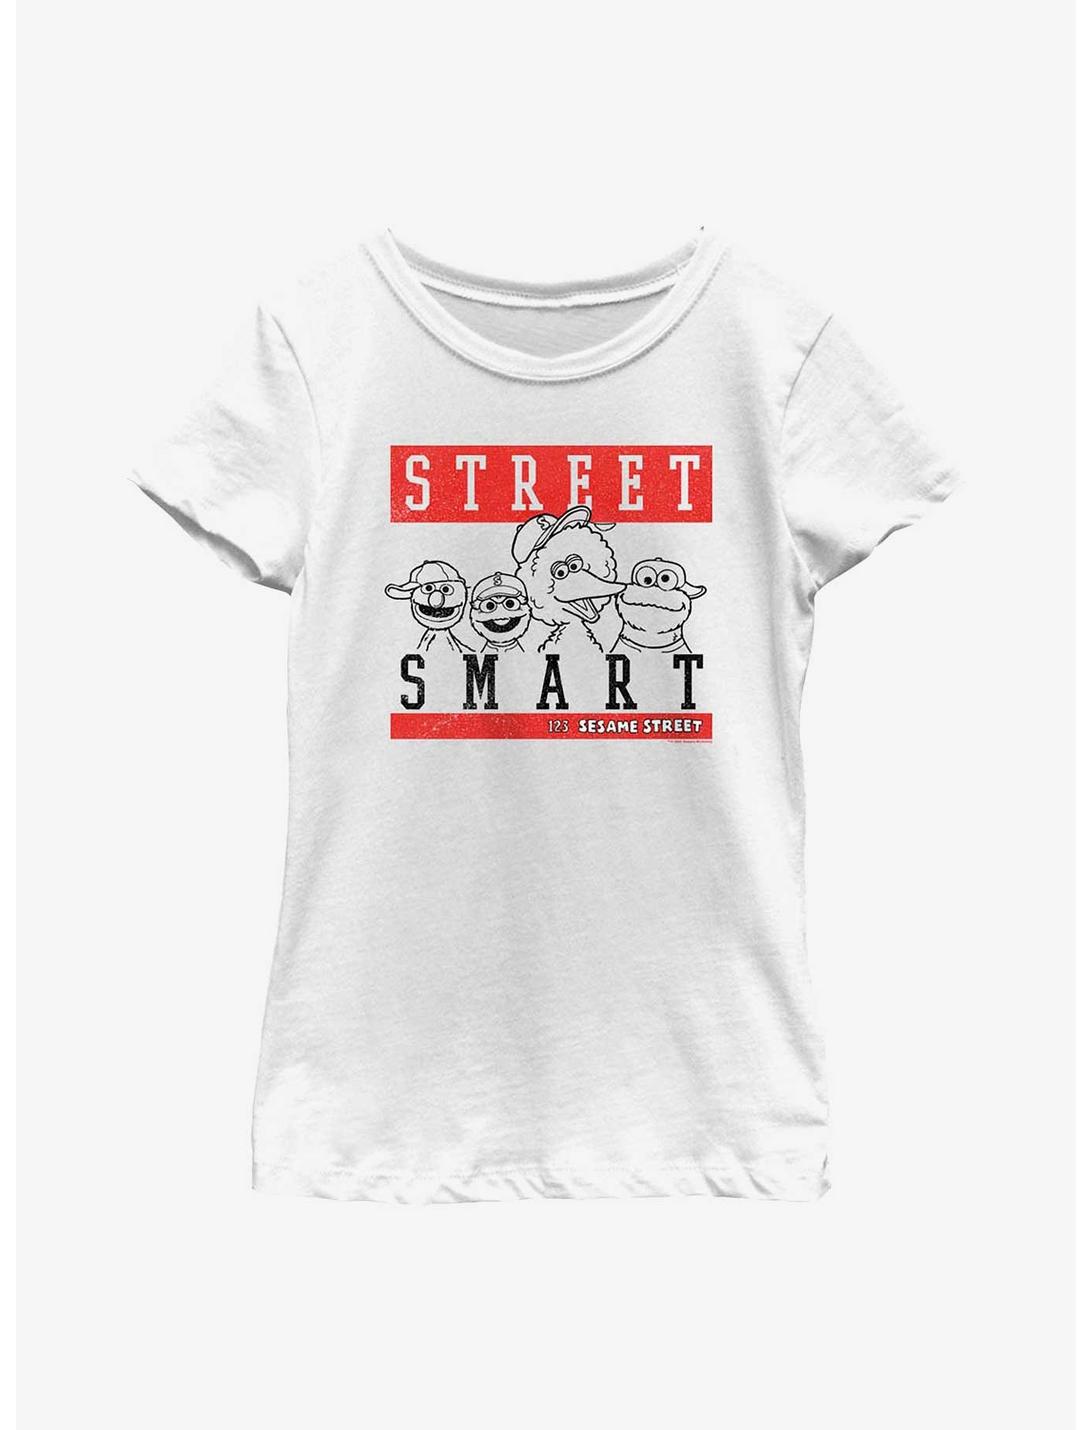 Sesame Street Street Smart Youth Girls T-Shirt, WHITE, hi-res